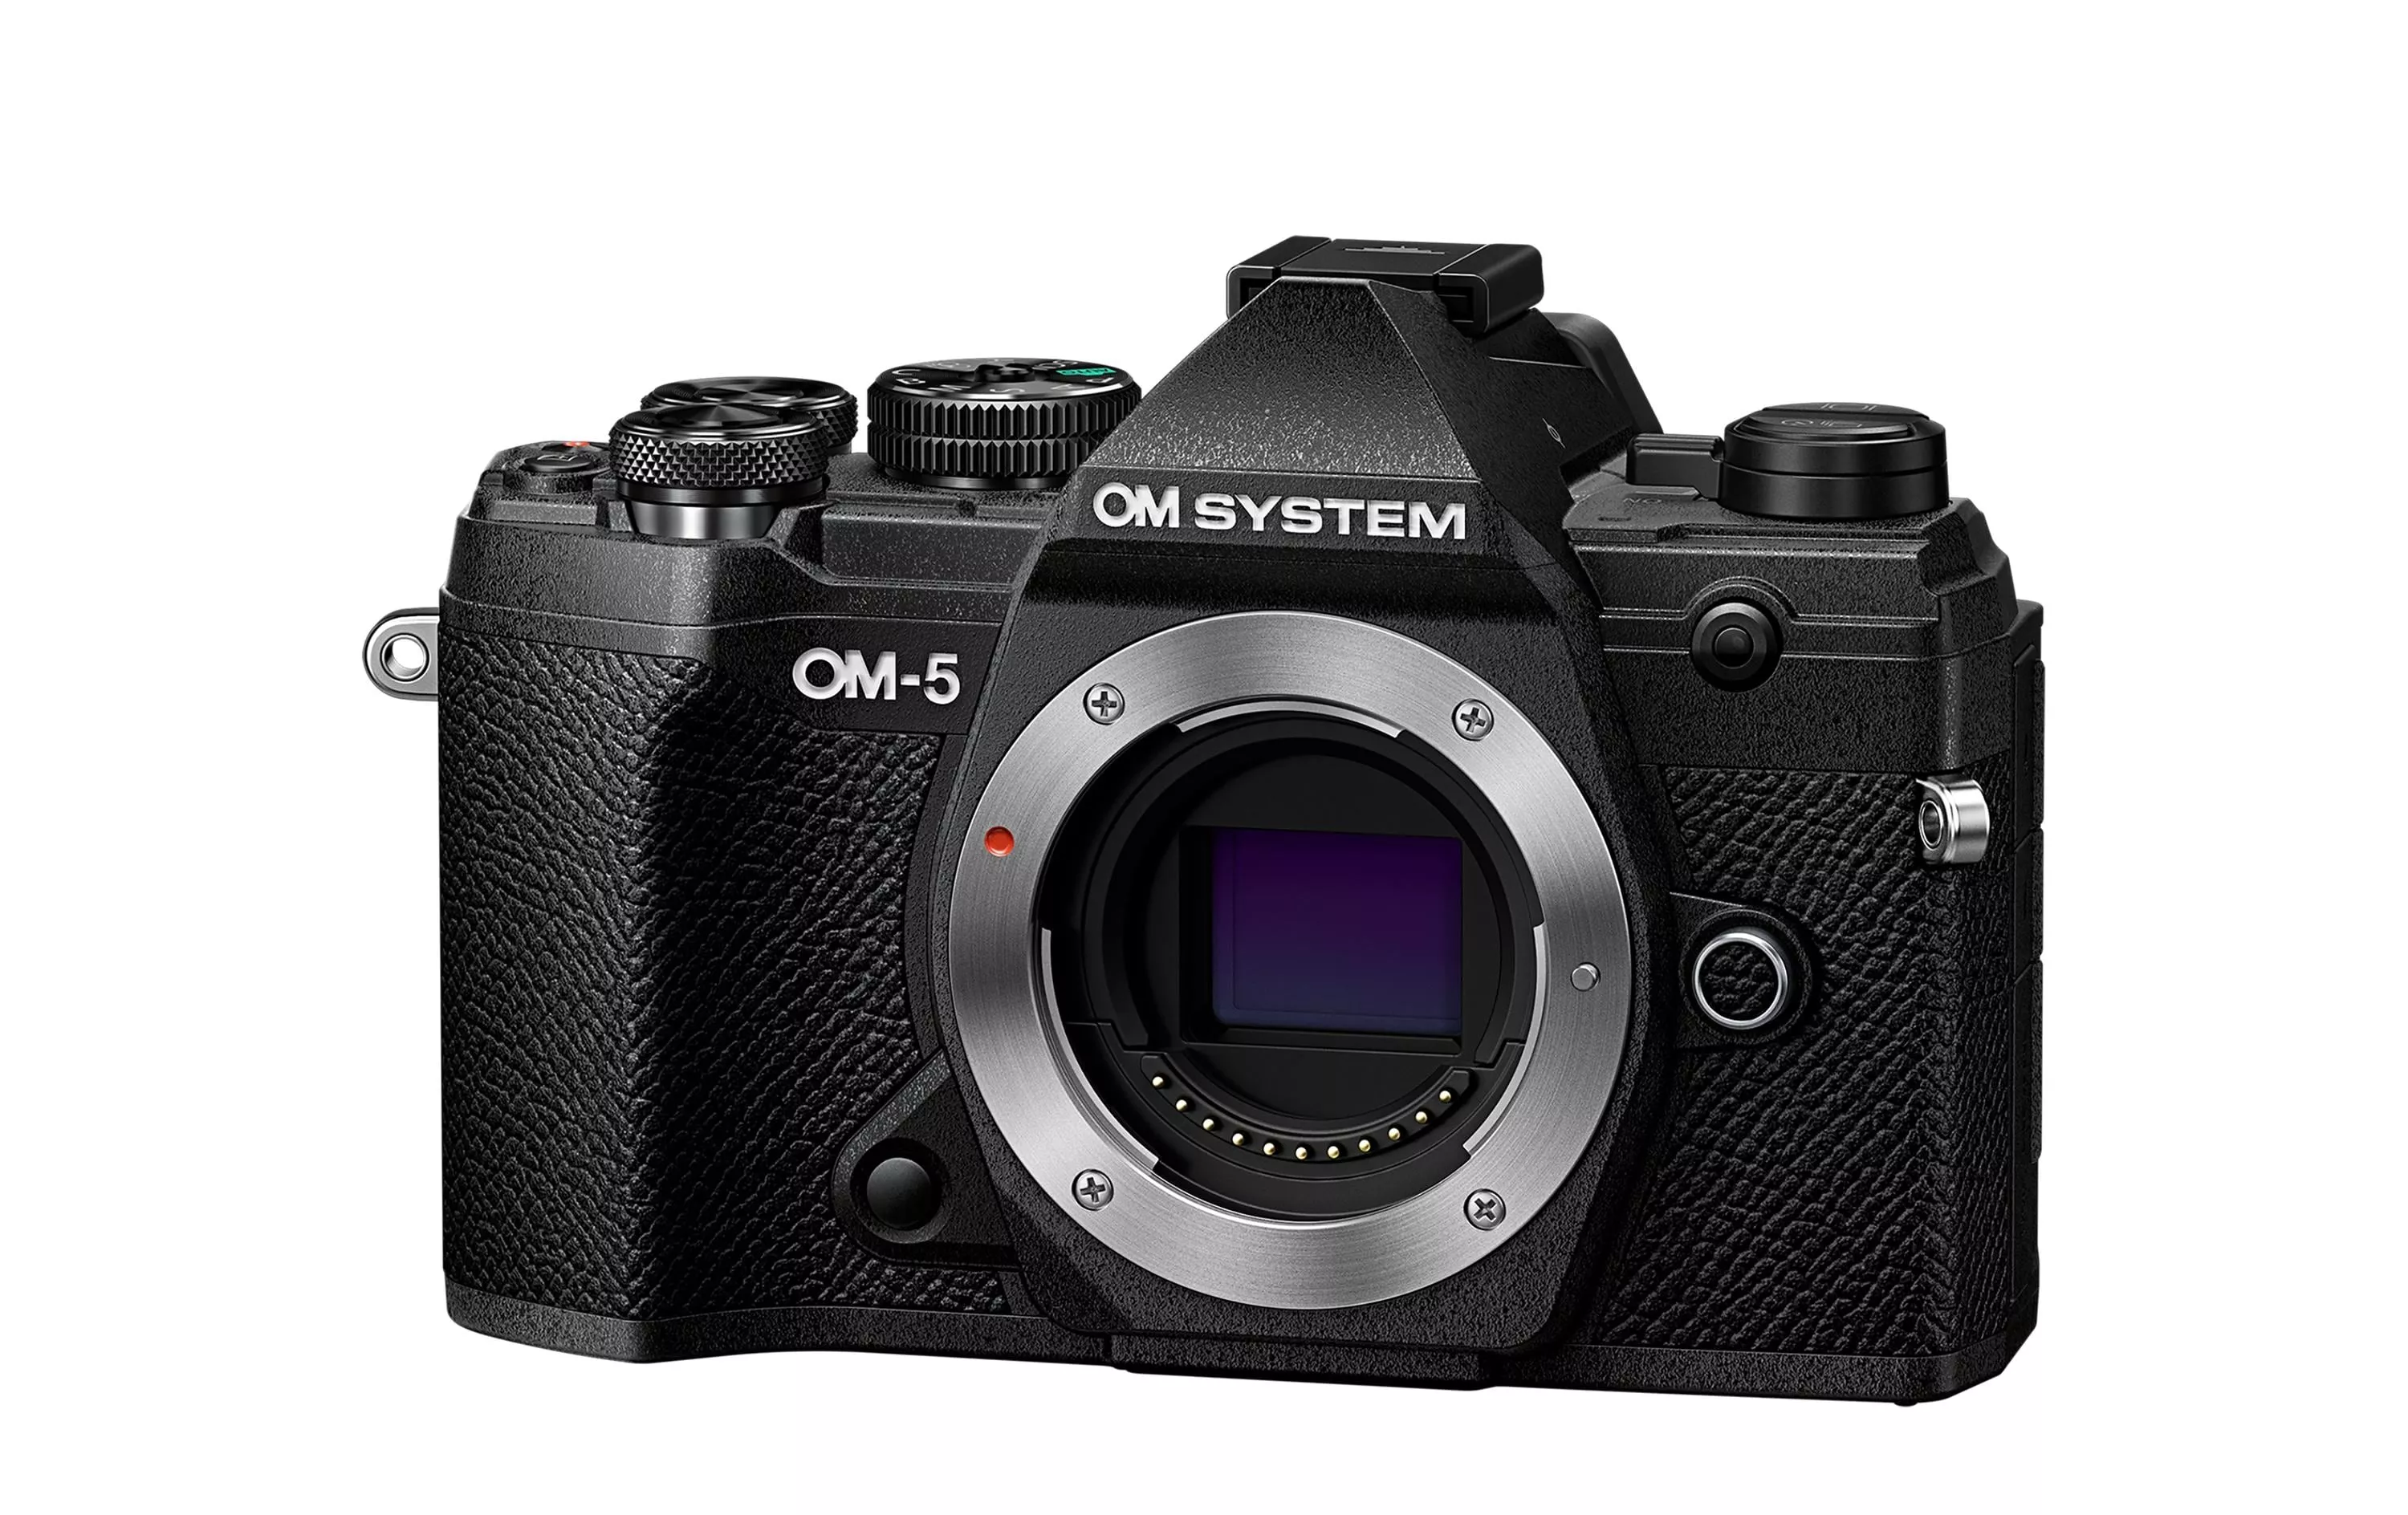 Fotocamera OM System OM-5 Corpo nero